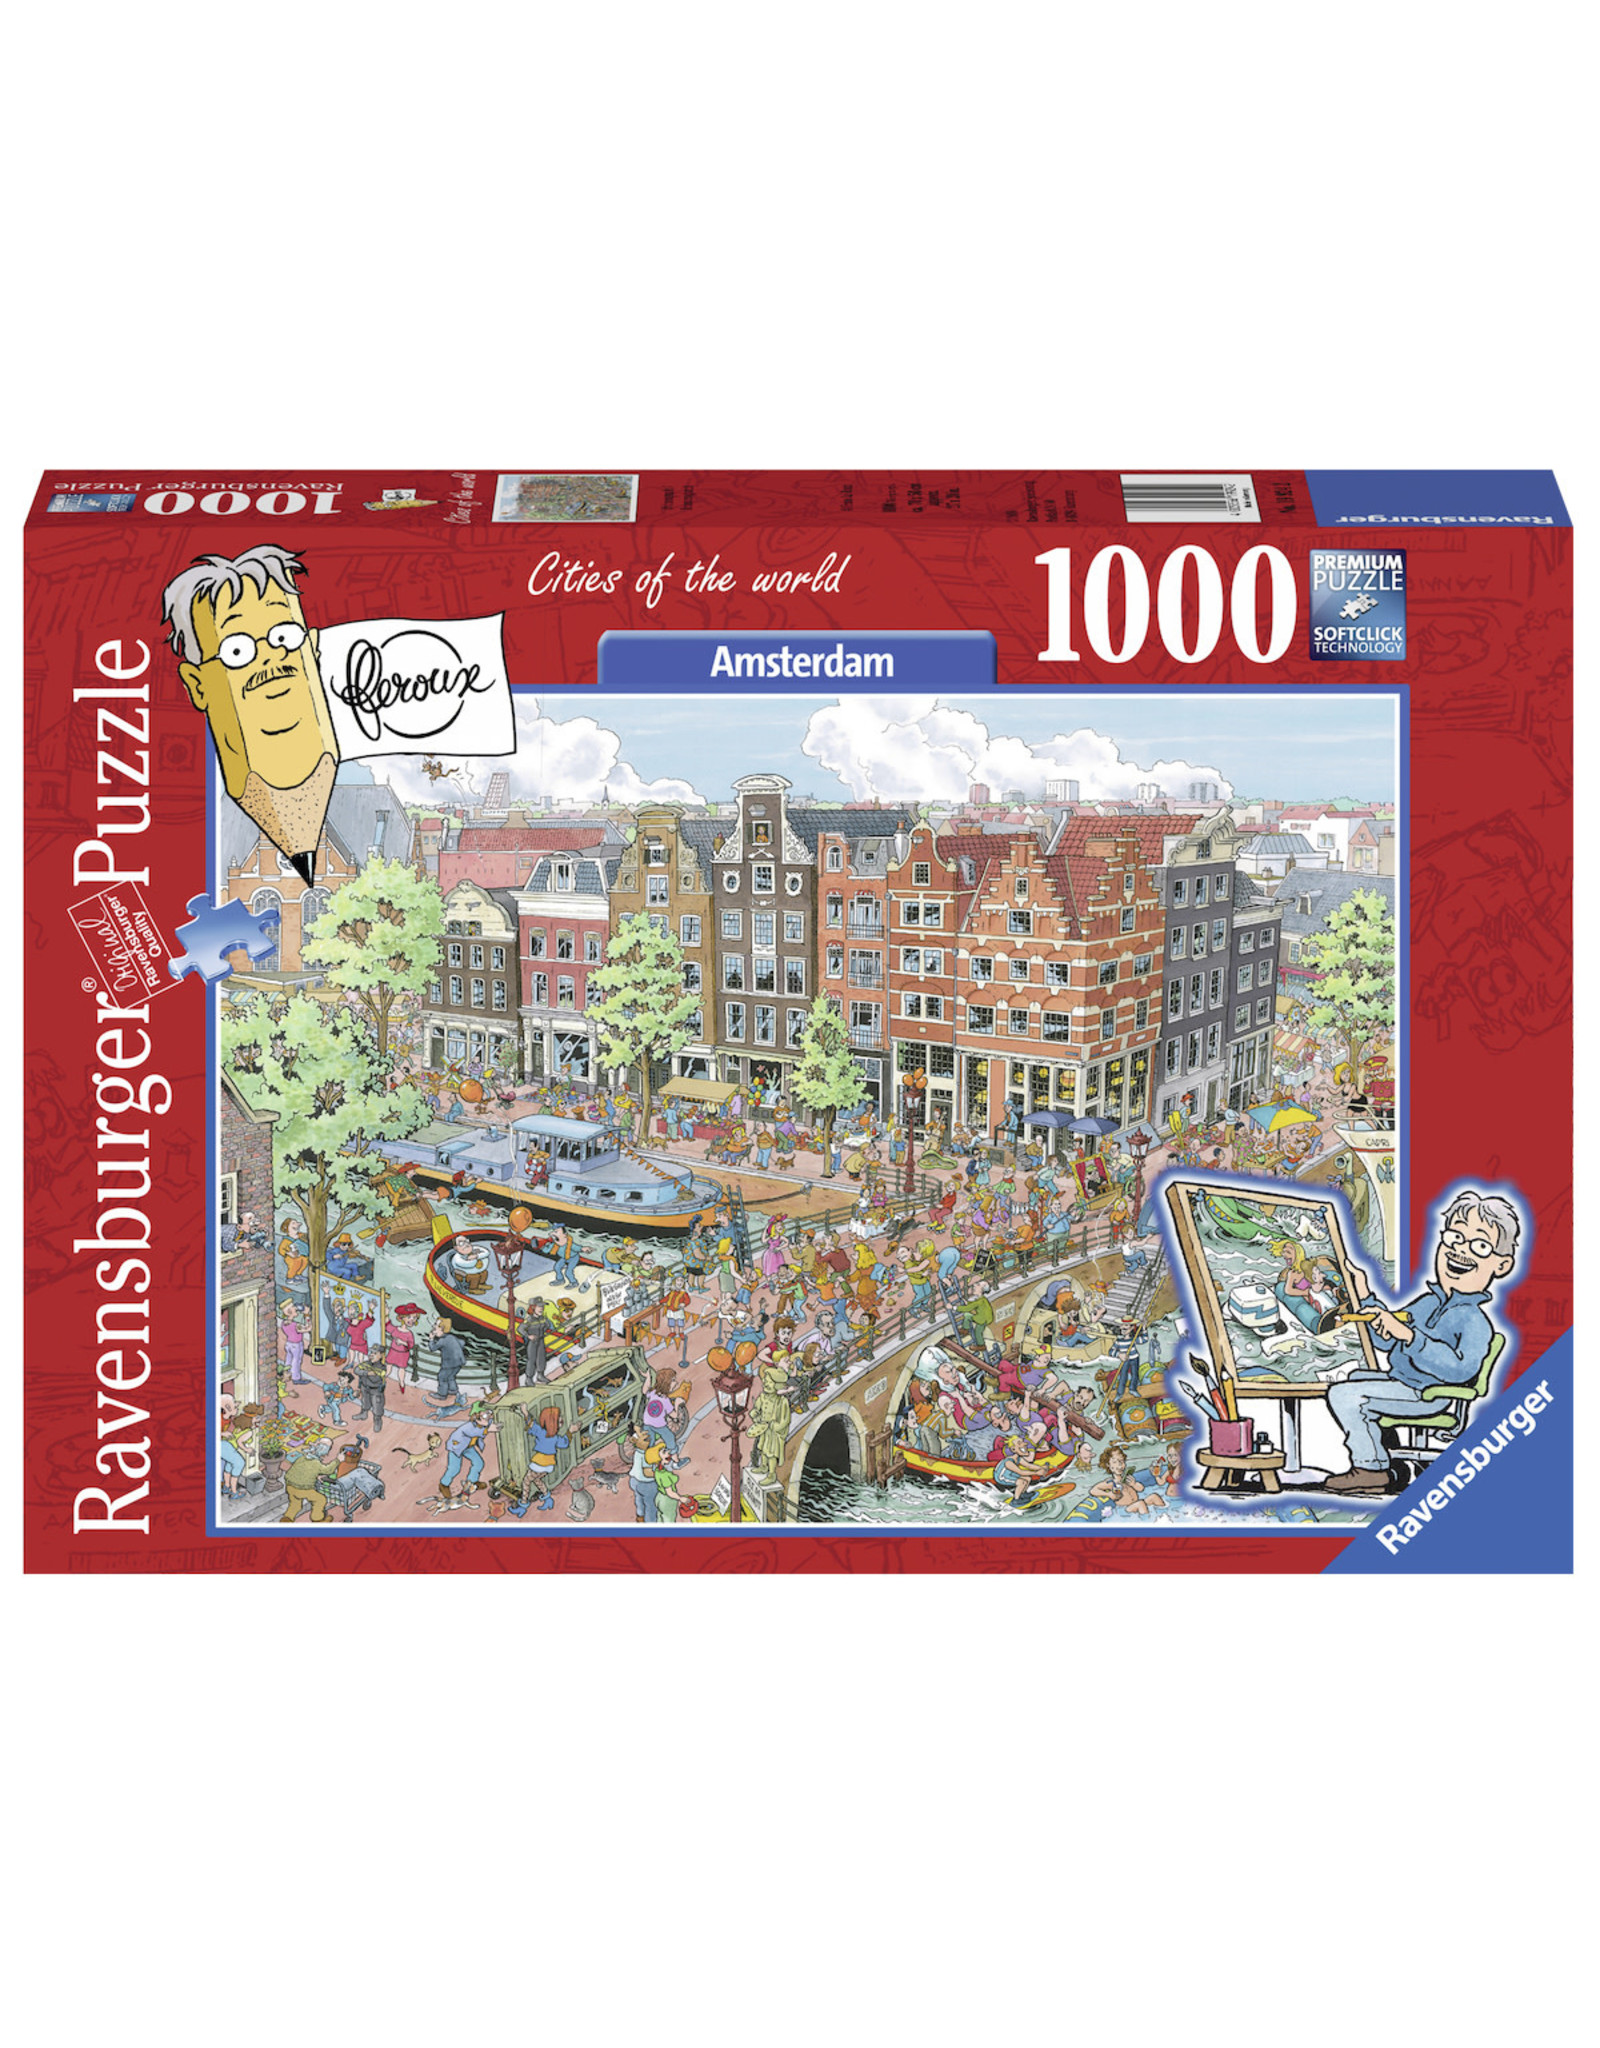 Ravensburger Ravensburger puzzel 191925  Fleroux: SAmsterdam Prinsengrachr/Brouwersgracht - 1000 stukjes